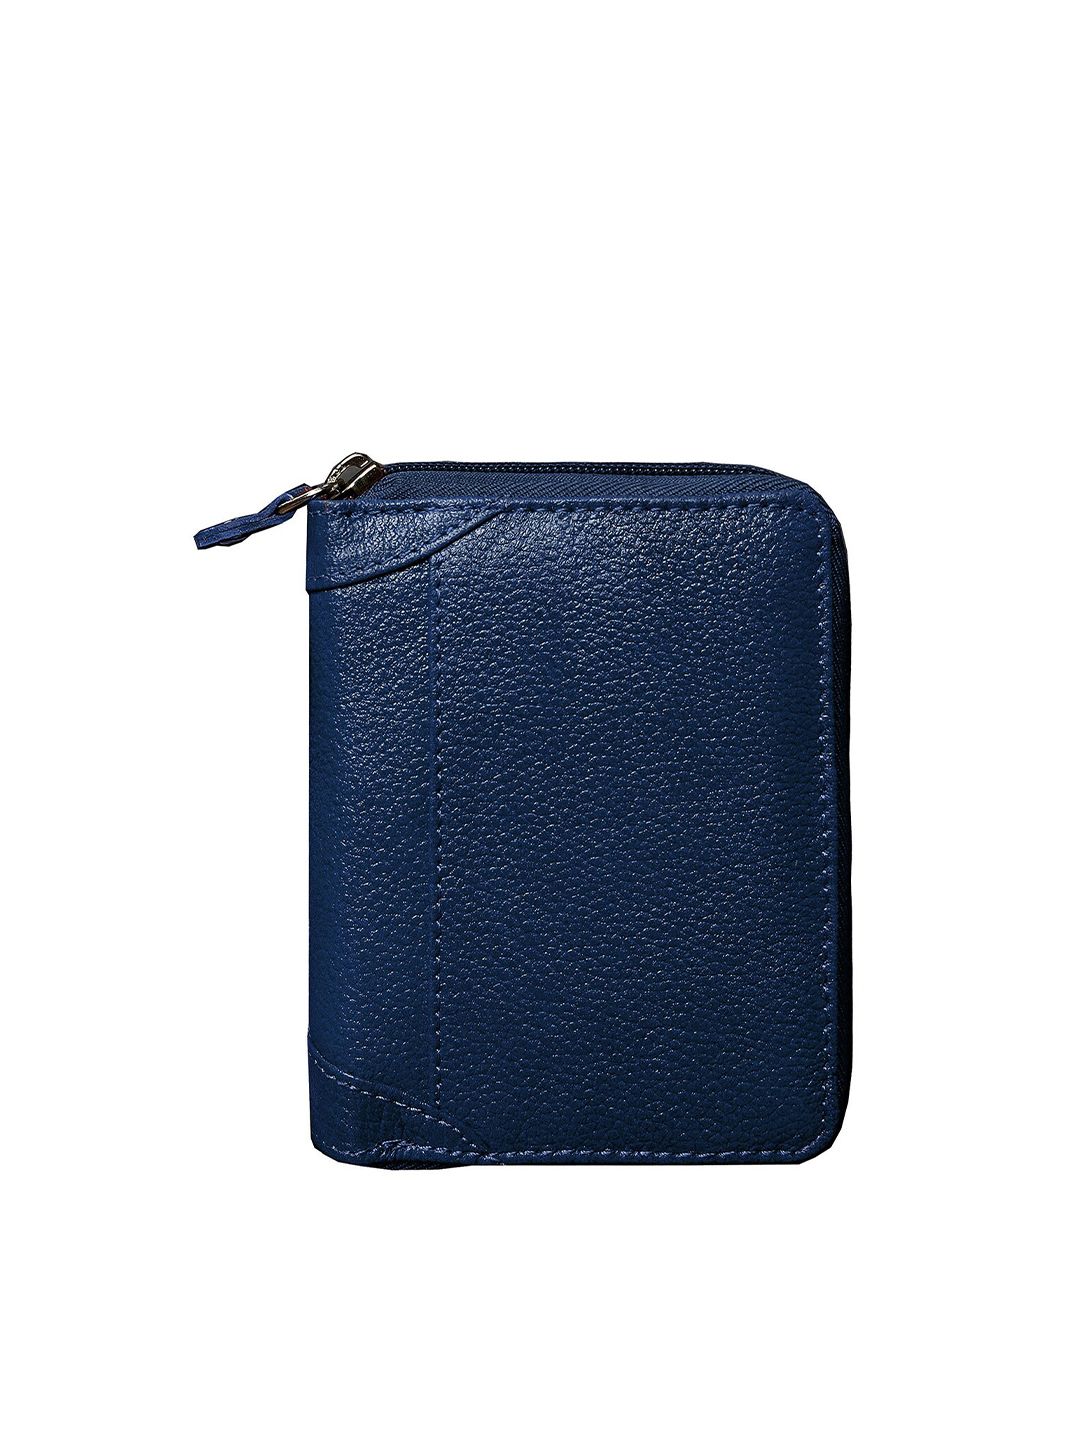 ABYS Blue Textured Genuine Leather Zip Around Card Holder Wallet Price in India